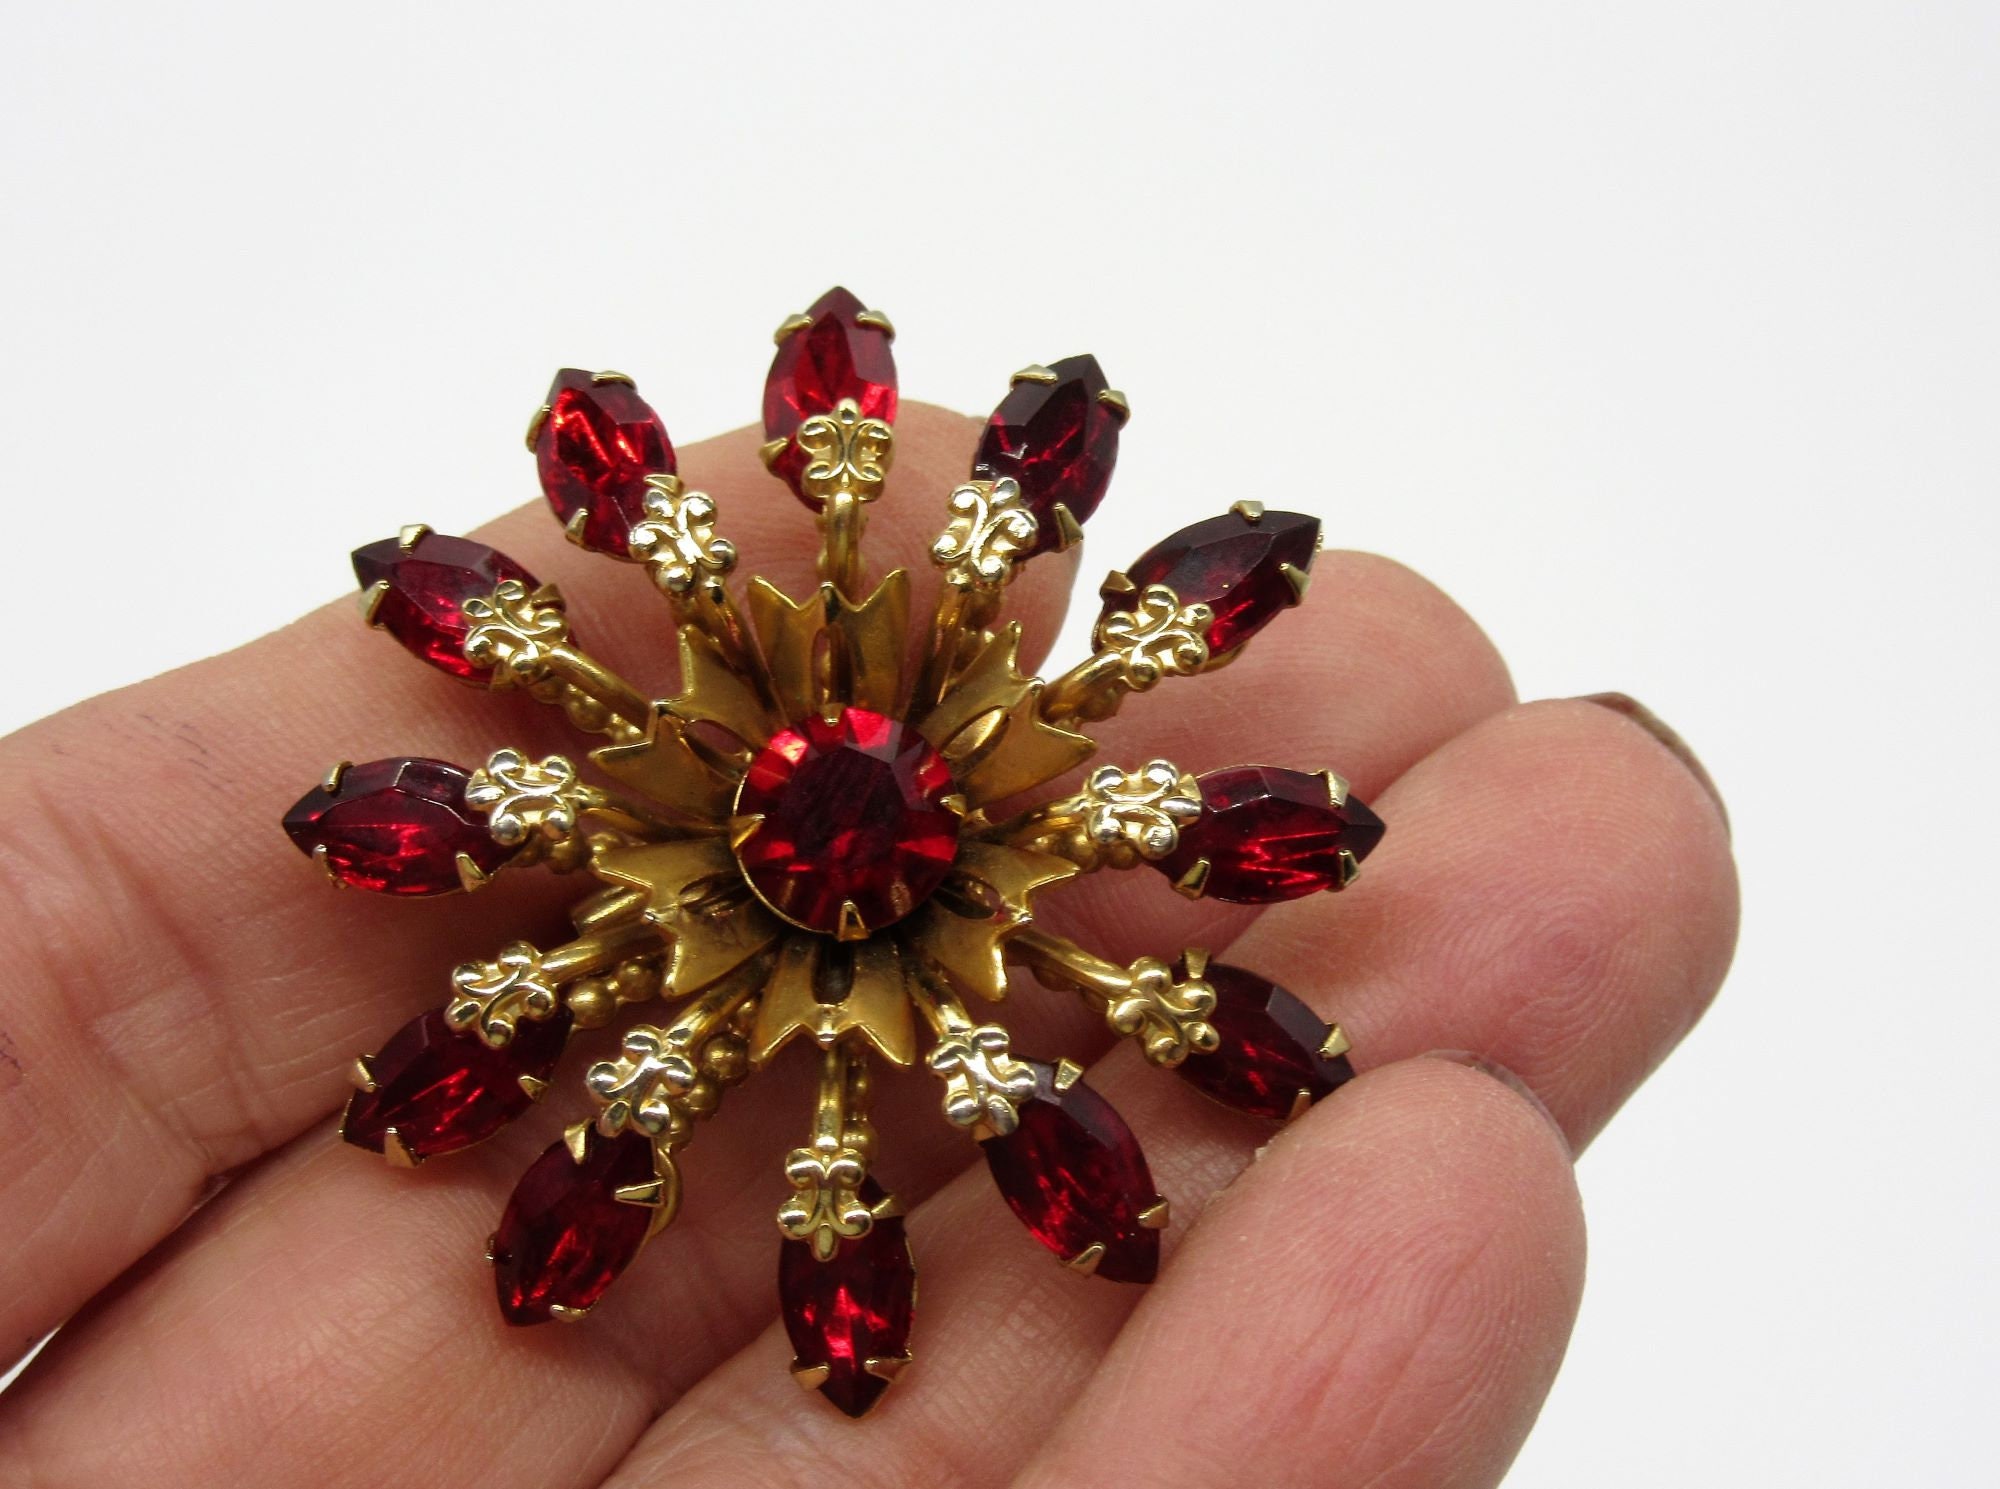 Vintage Style Elegant Flower Gold-tone Large Brooch Pin Red Rhinestone  Crystal